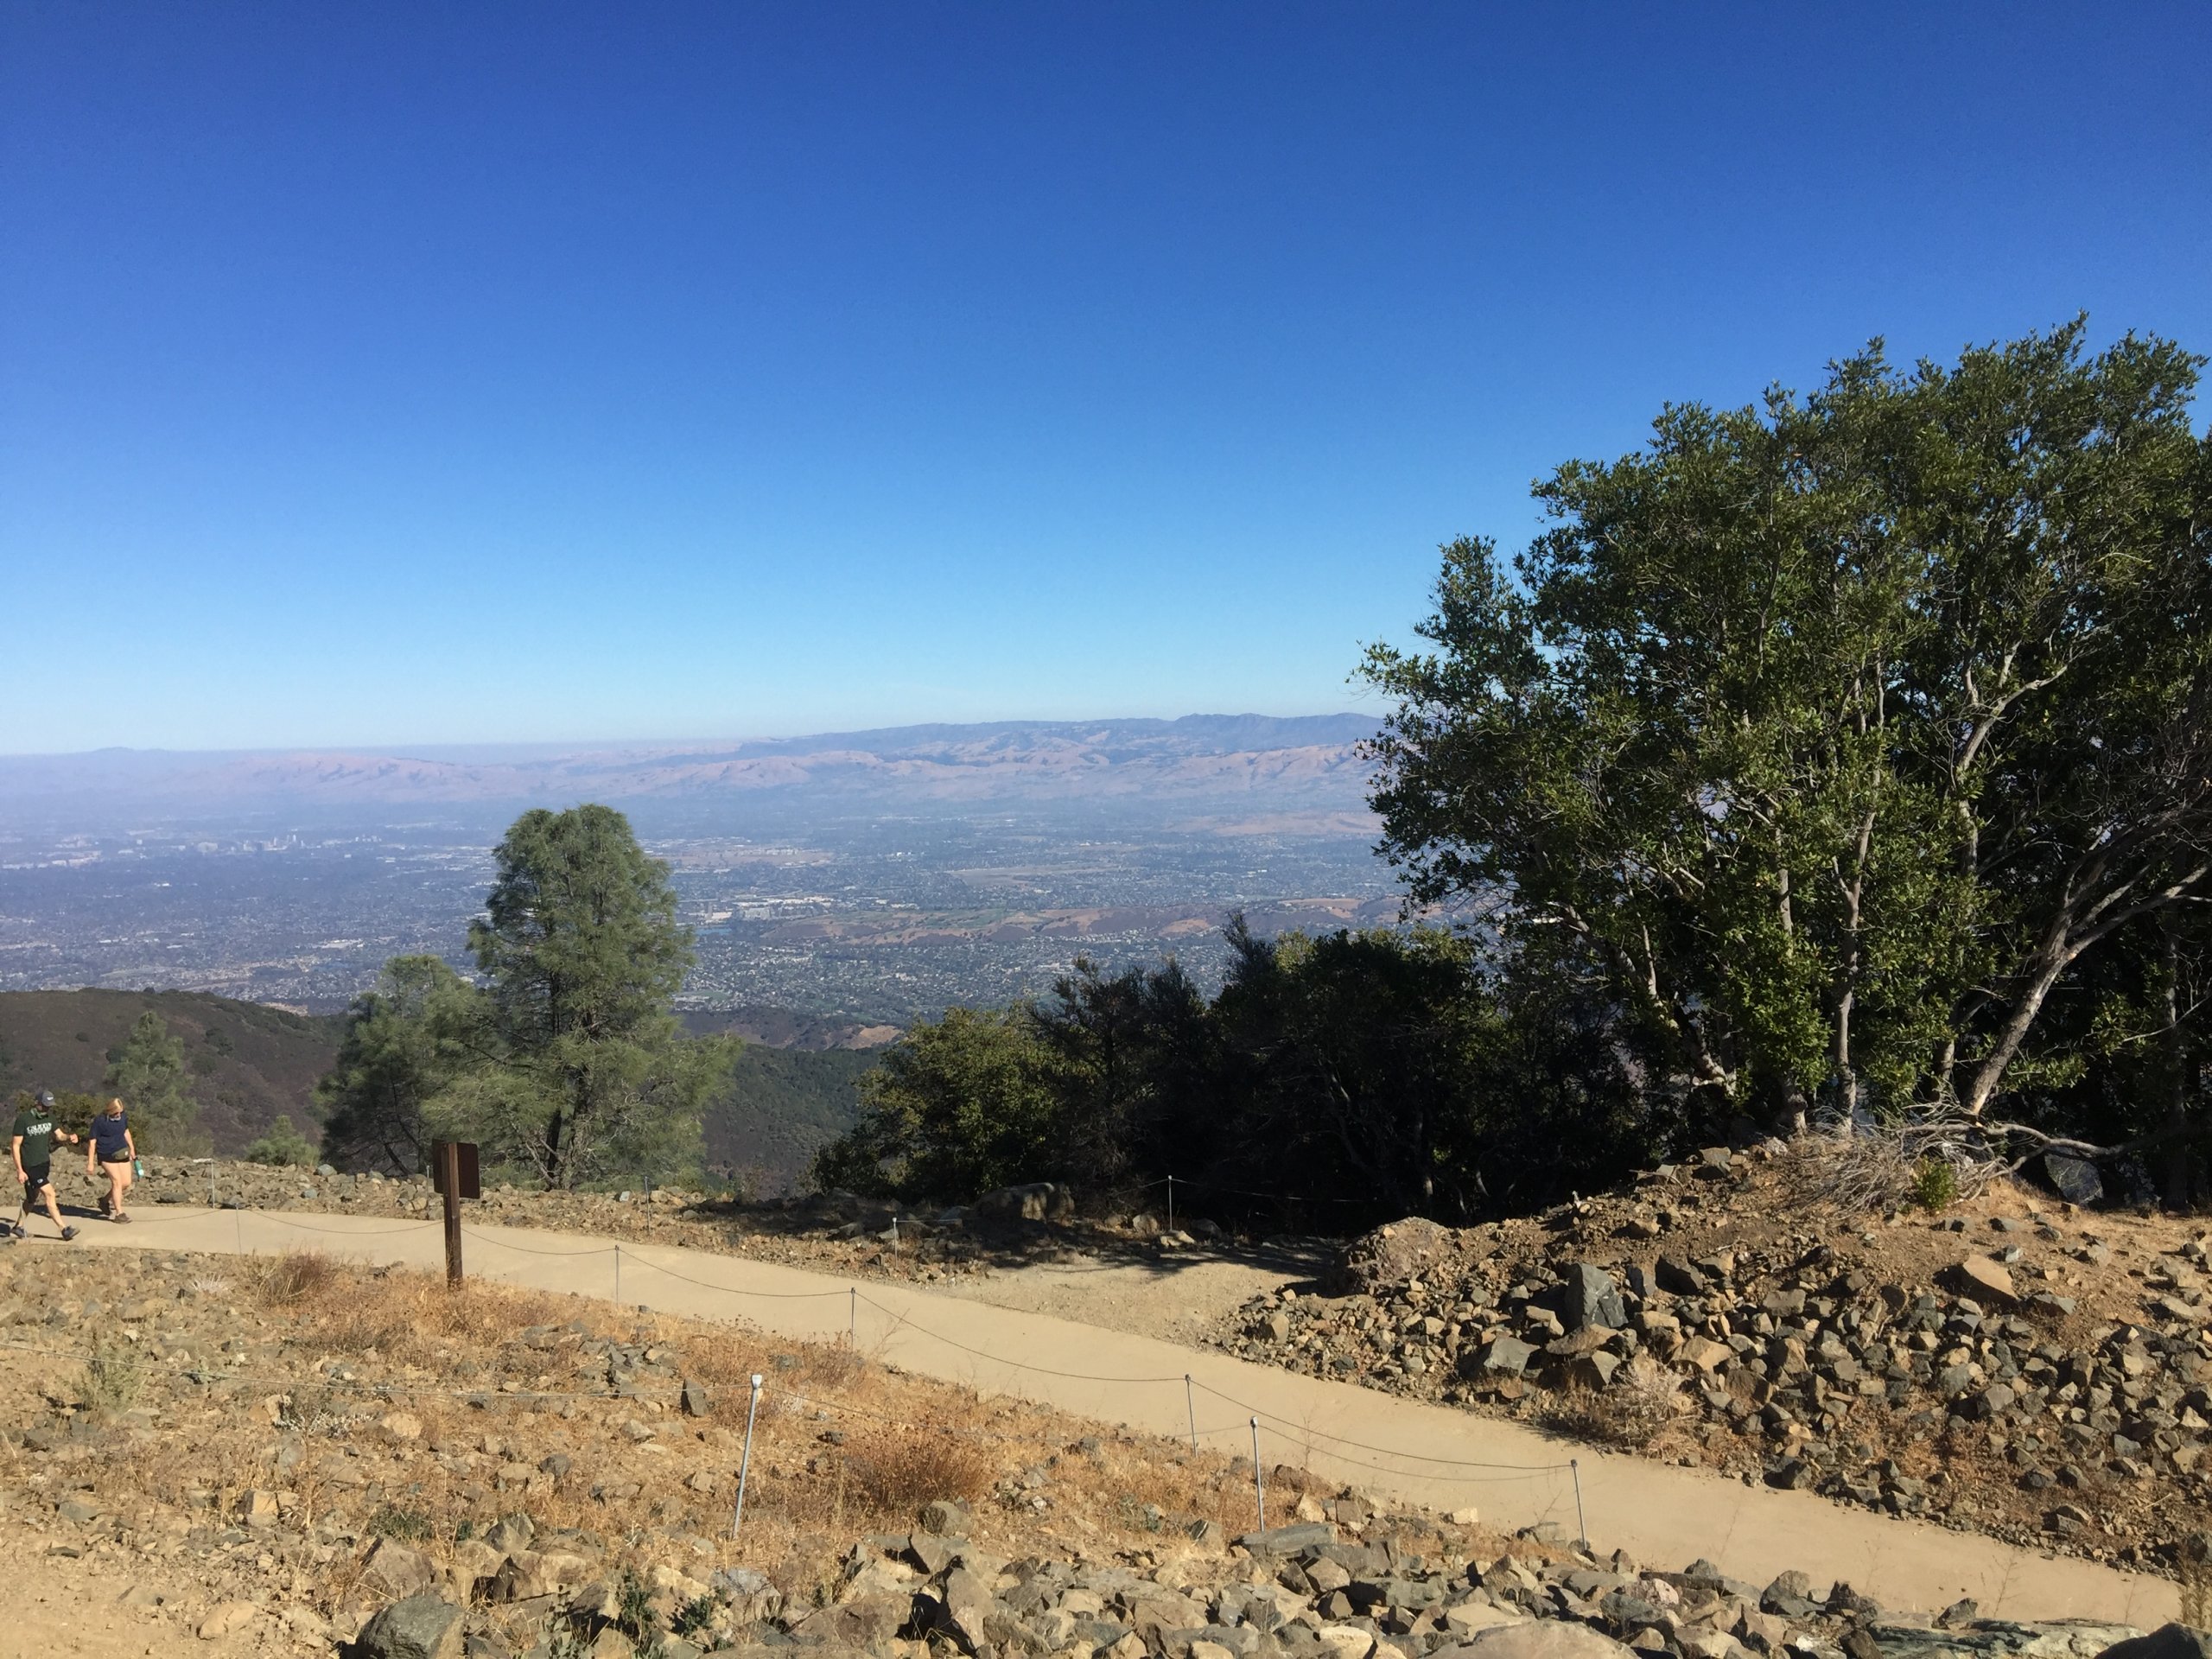 Mt. Unumhum above San Jose, CA